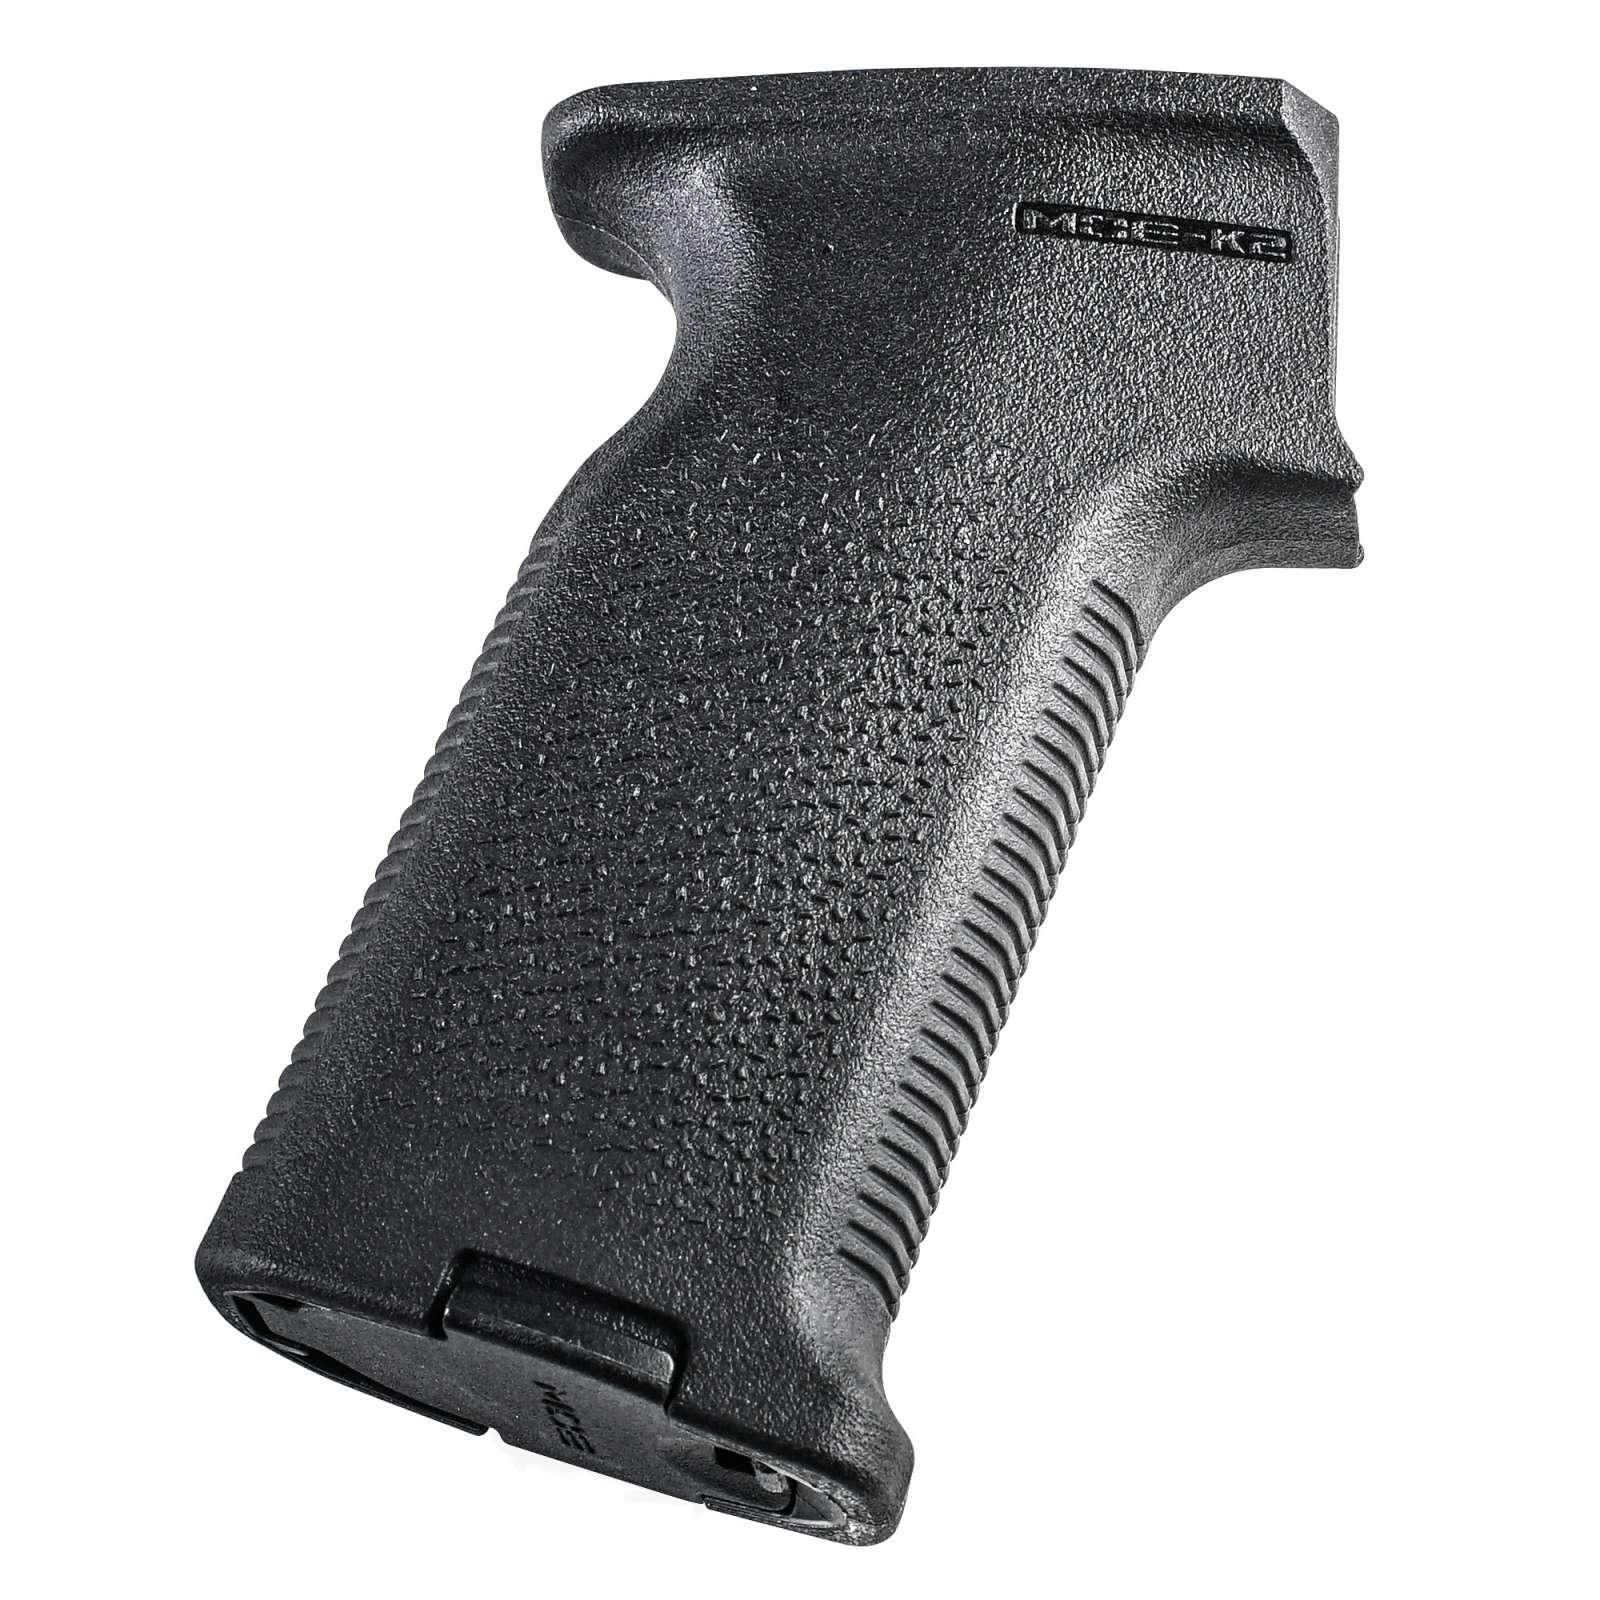 Magpul MAG683-BLK MOE K2 Pistol Grip Aggressive Textured Polymer Black ...